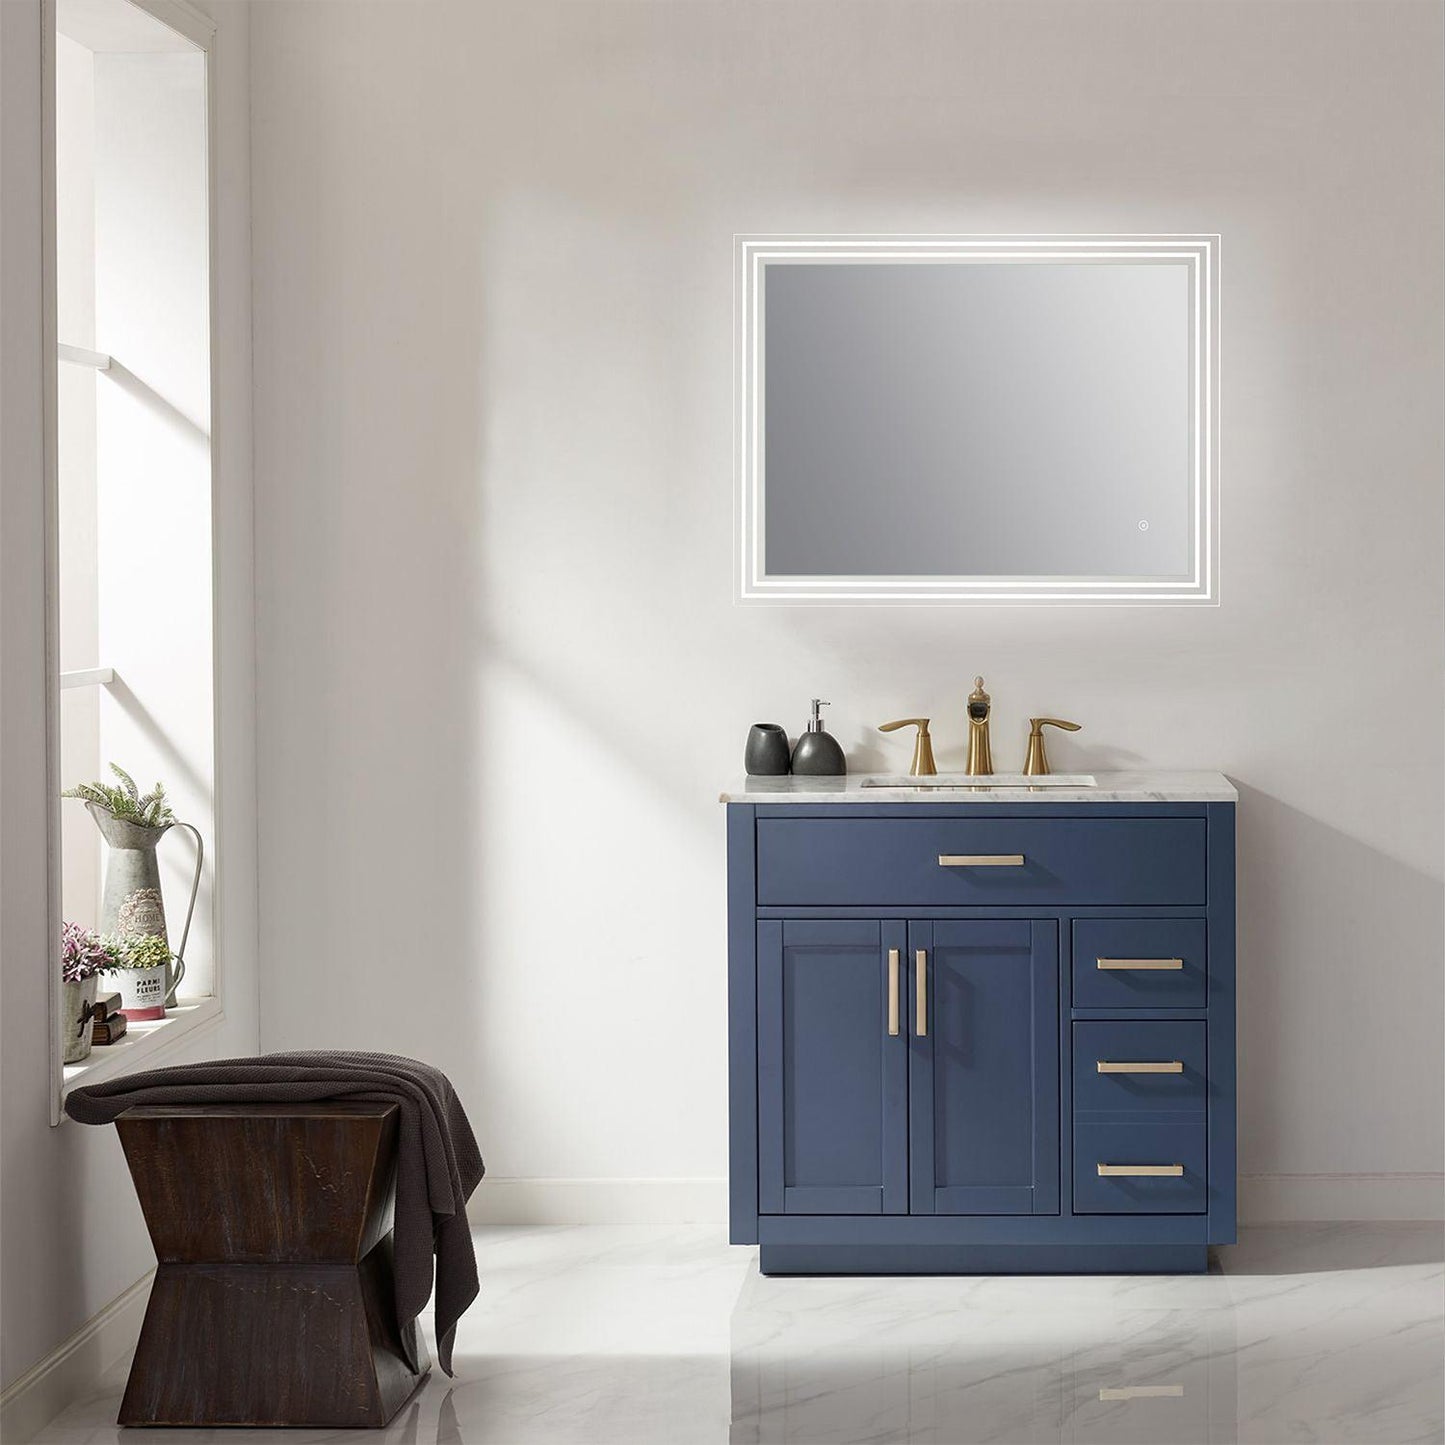 Altair Livorno Rectangle Frameless Modern LED Bathroom Vanity Mirror - Sea & Stone Bath